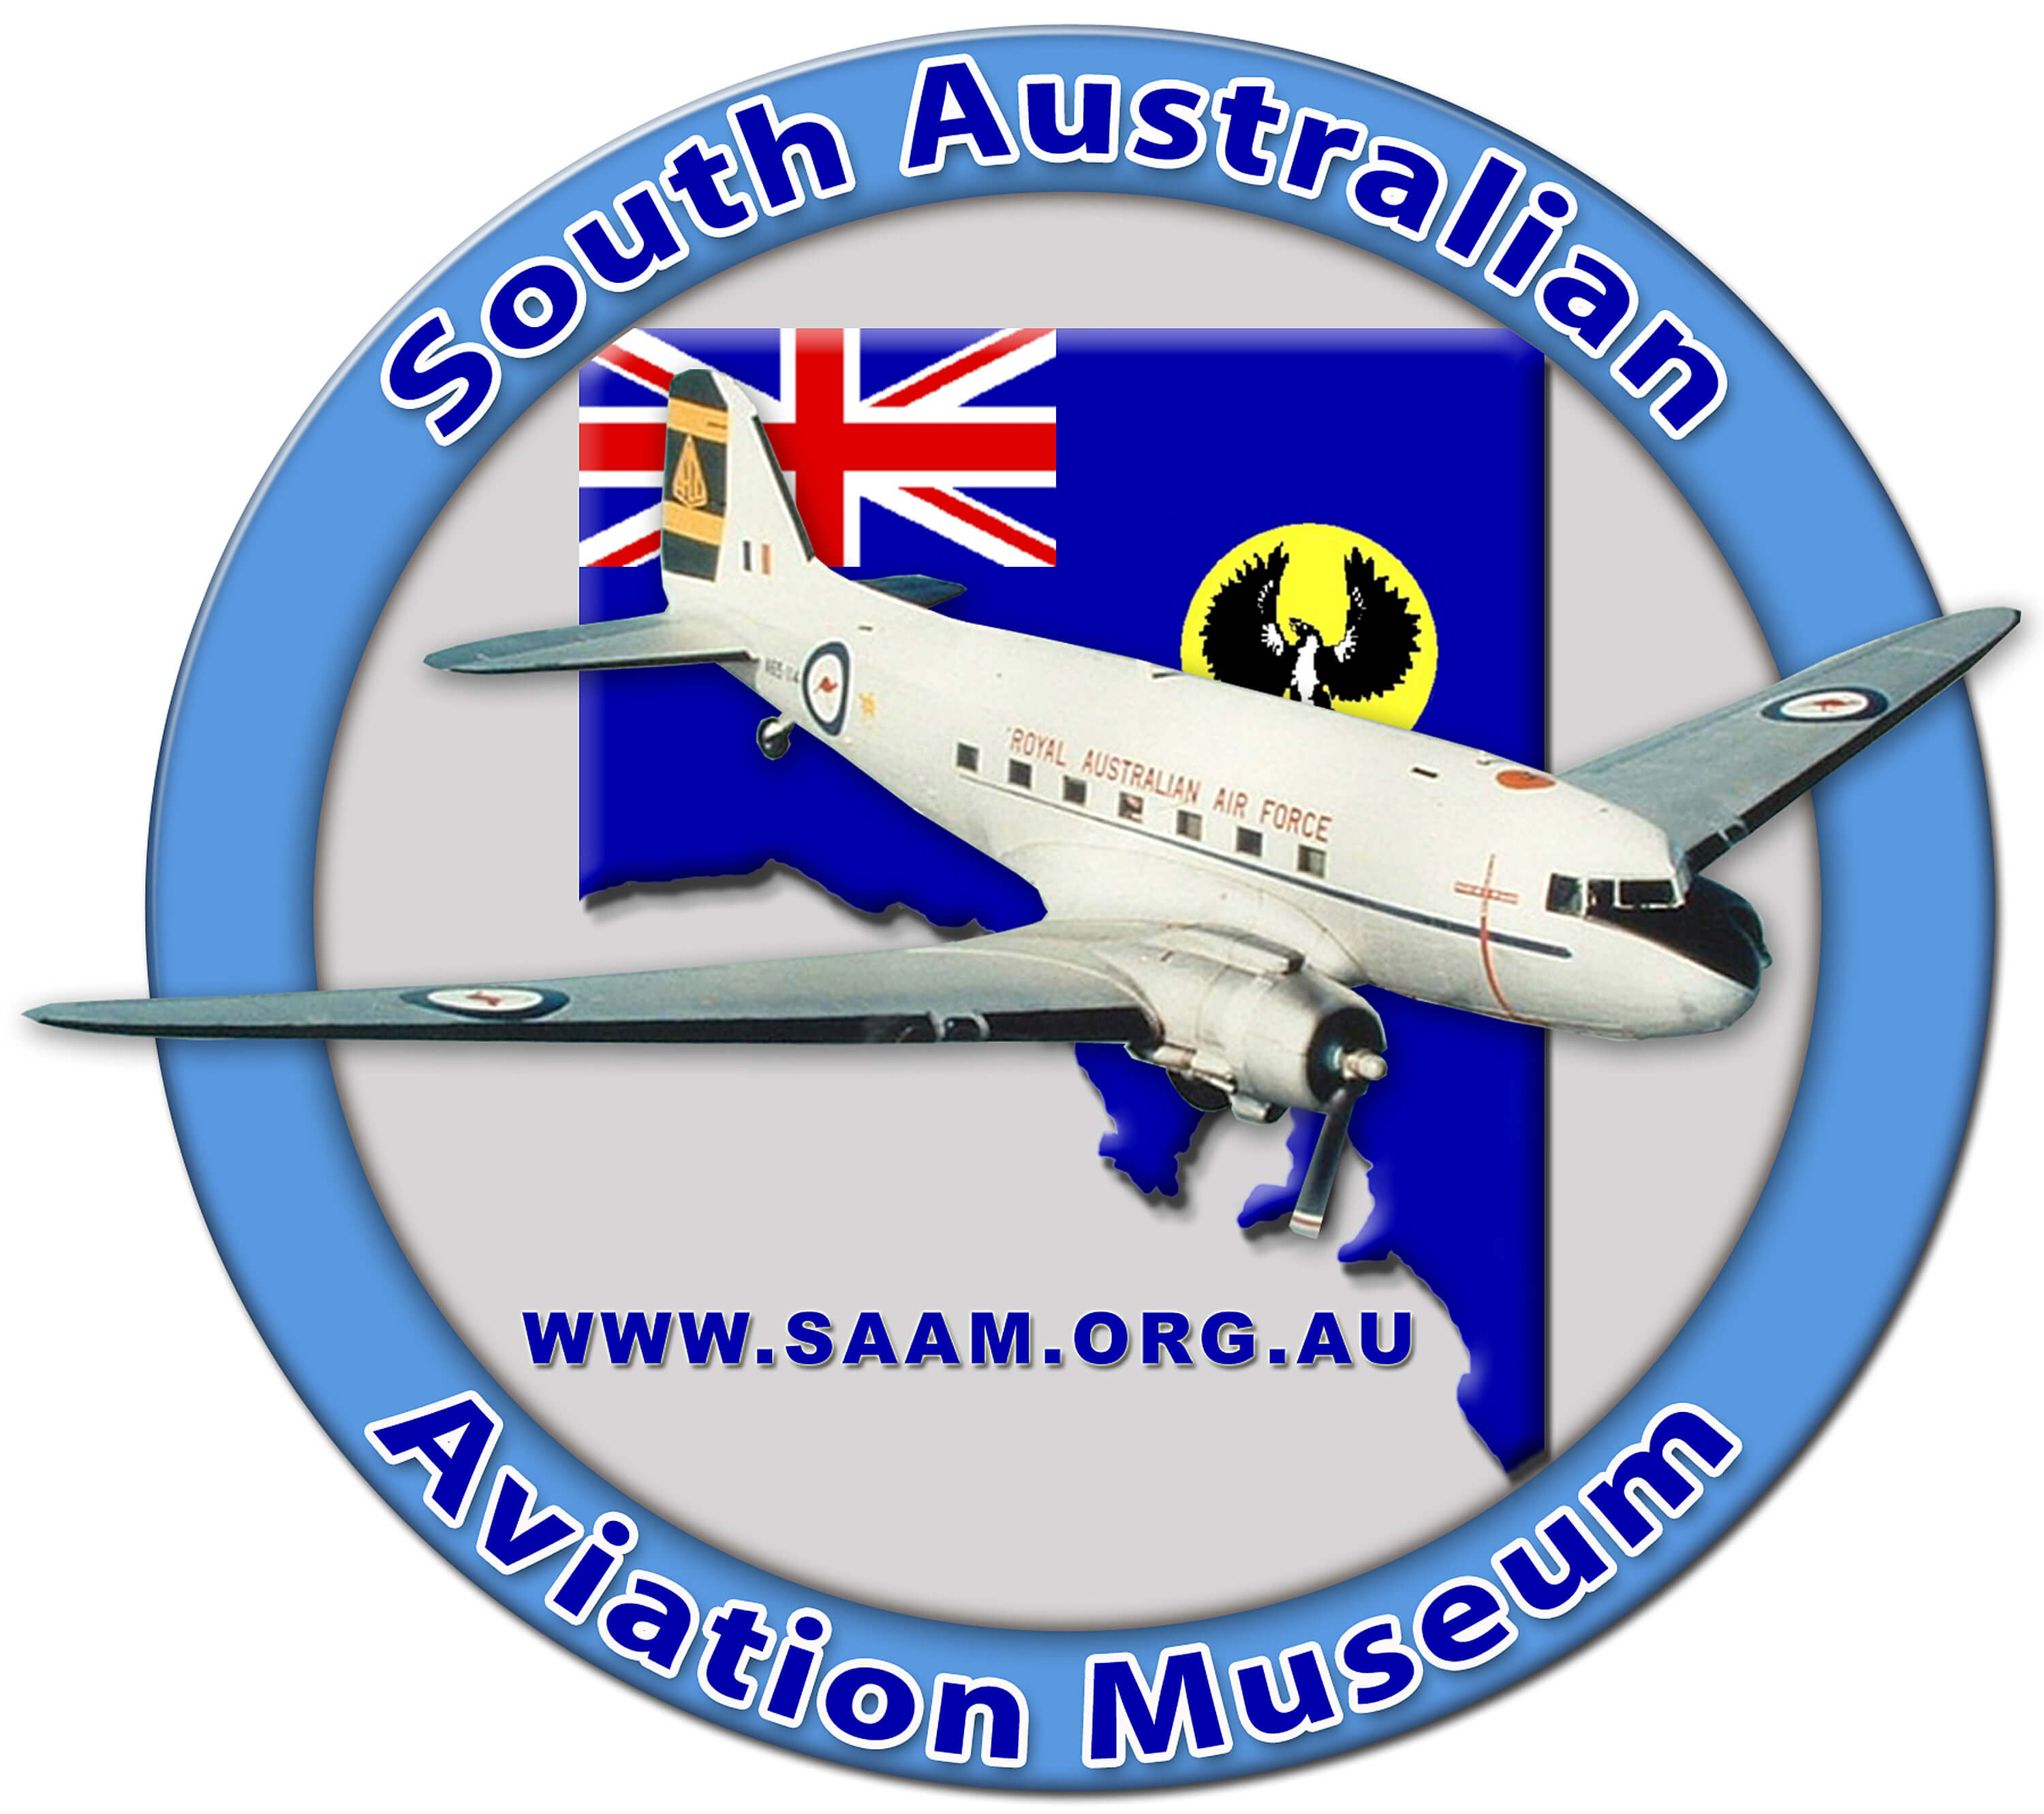 The South Australian Aviation Museum Inc